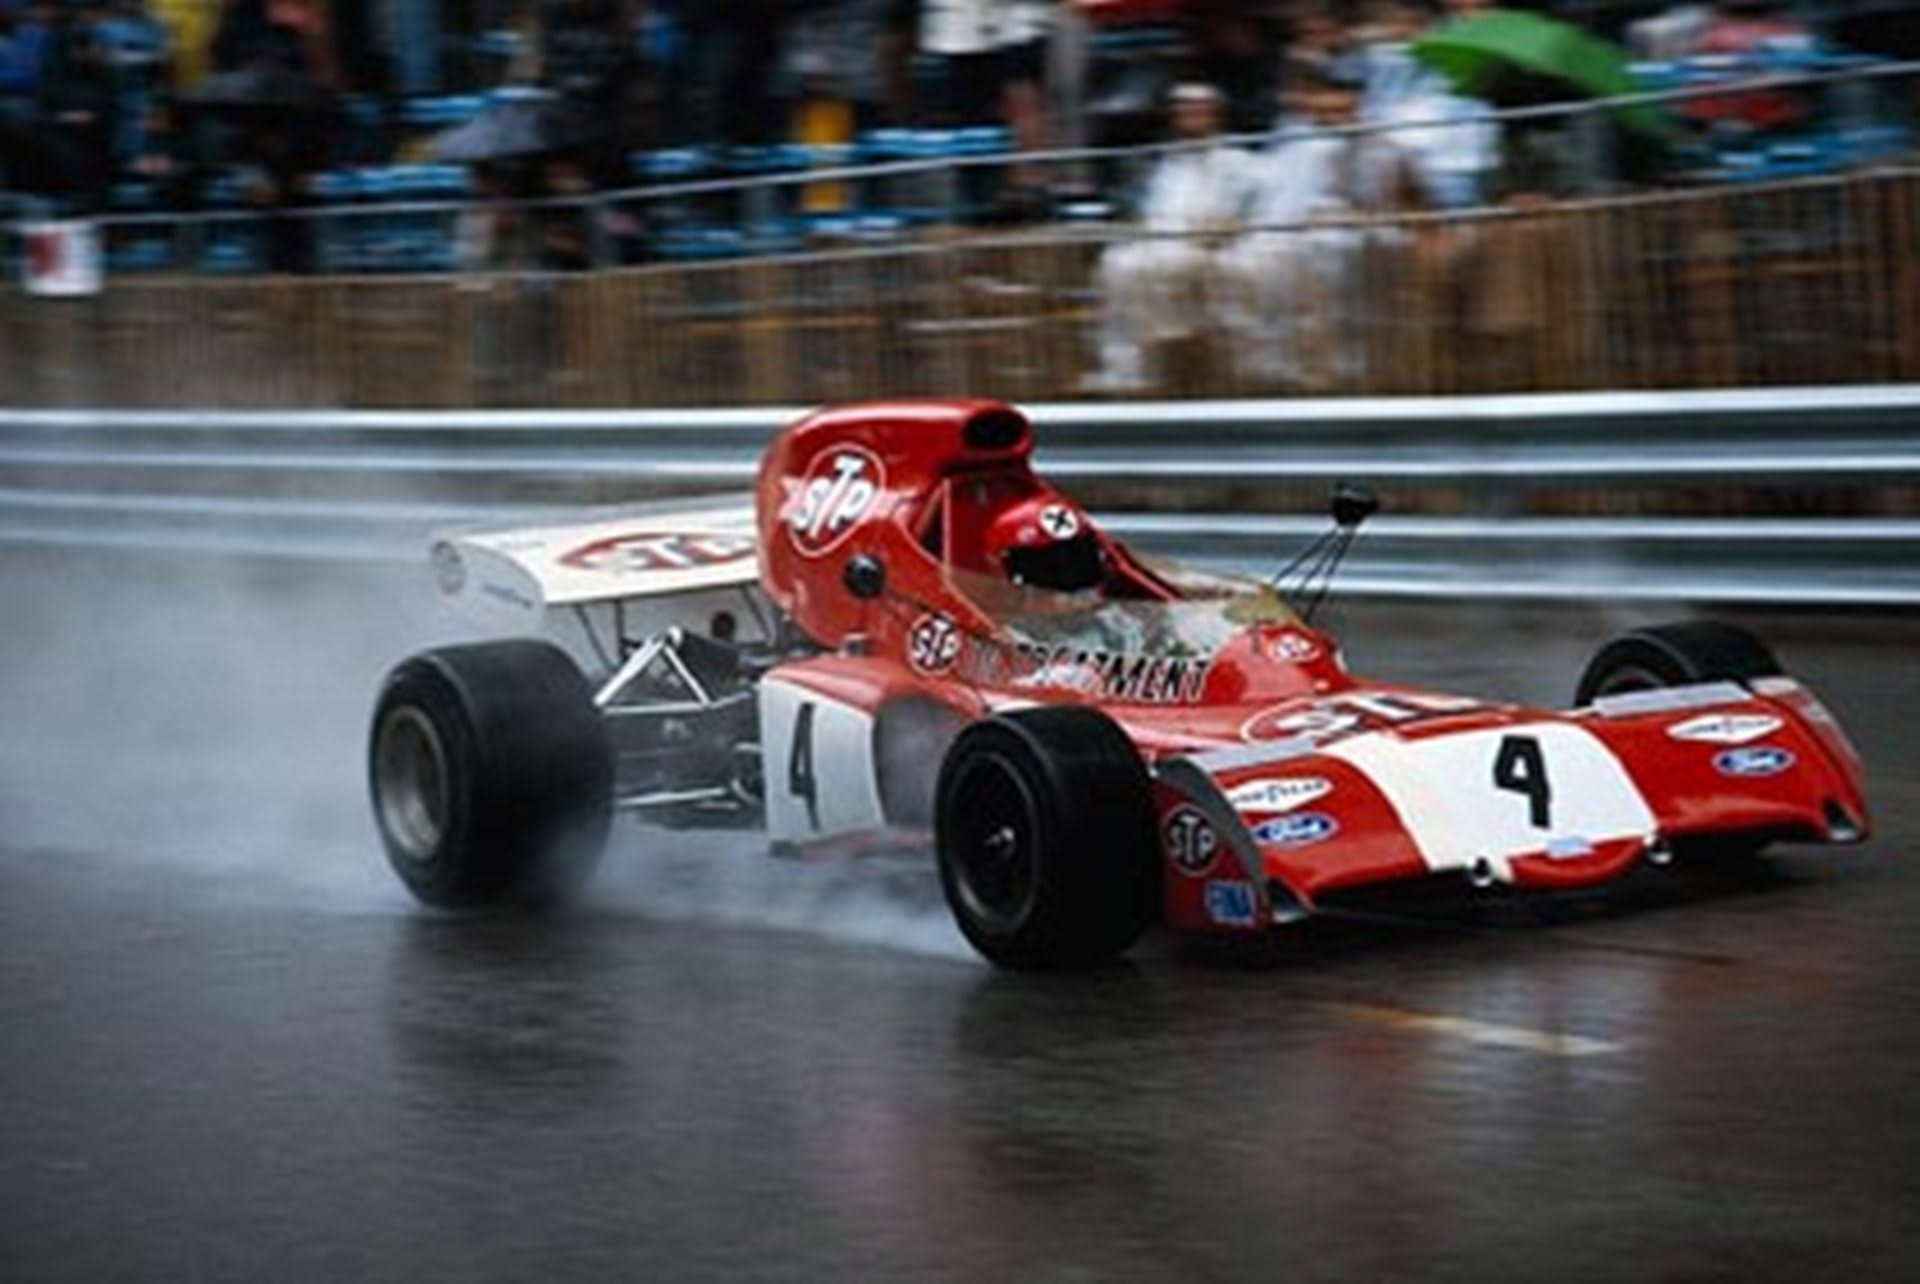  Grand Prix Monaco 1978 - Formula One F1 - Vintage Car